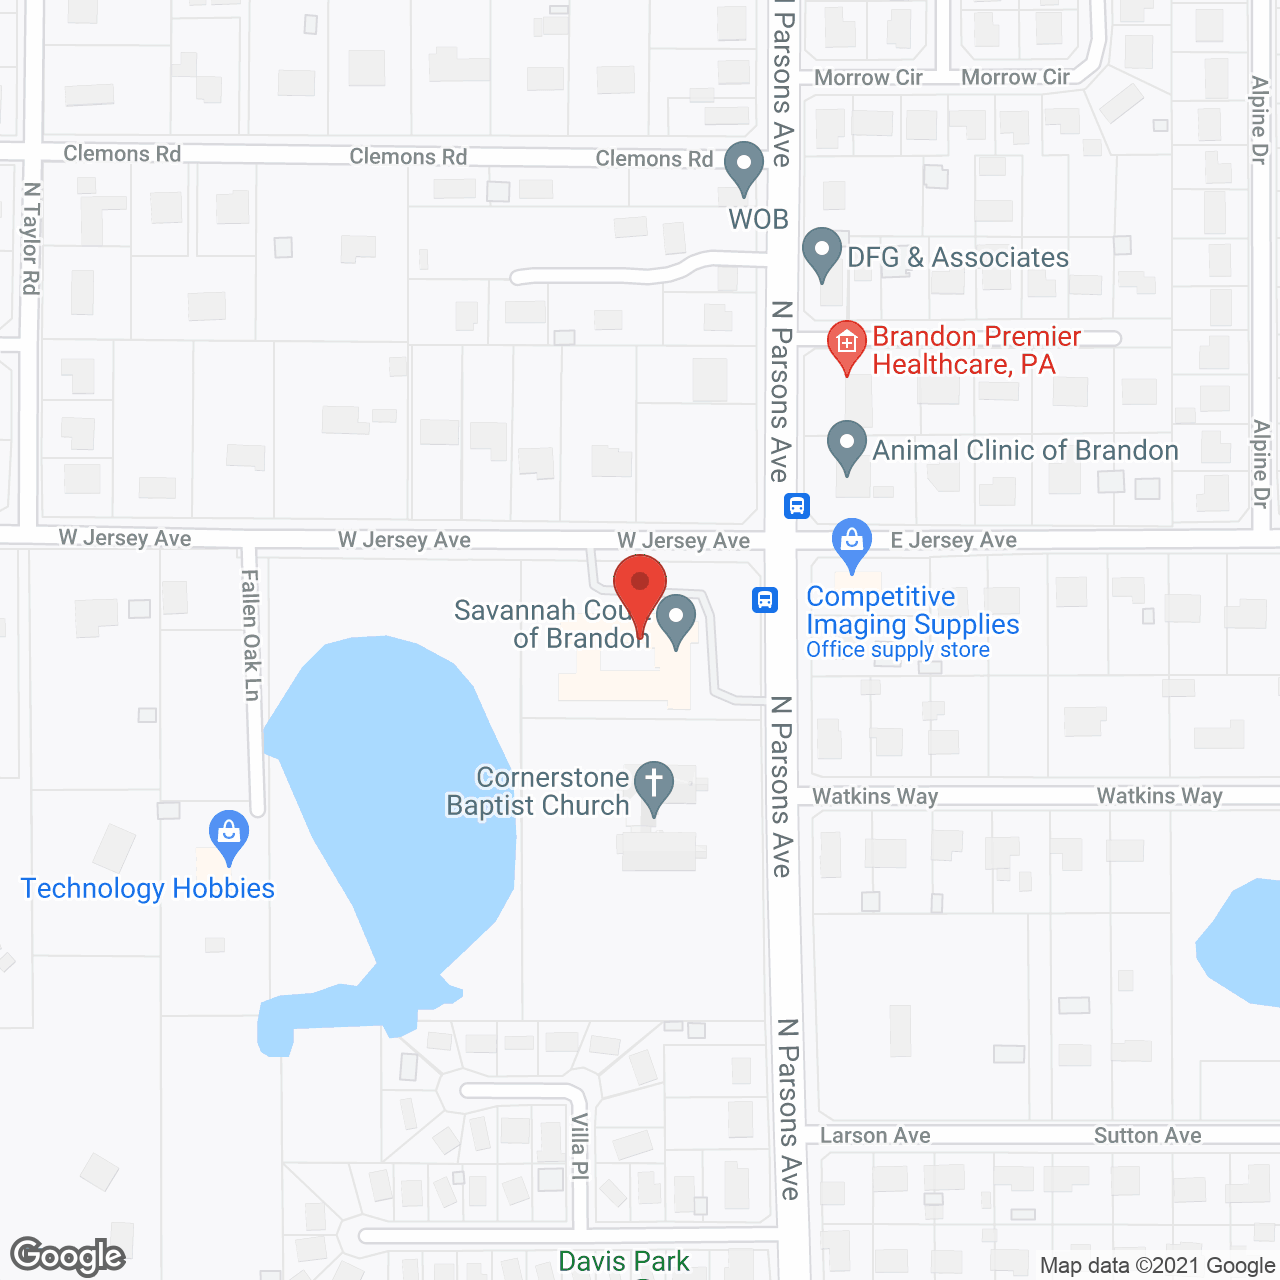 Savannah Court of Brandon in google map